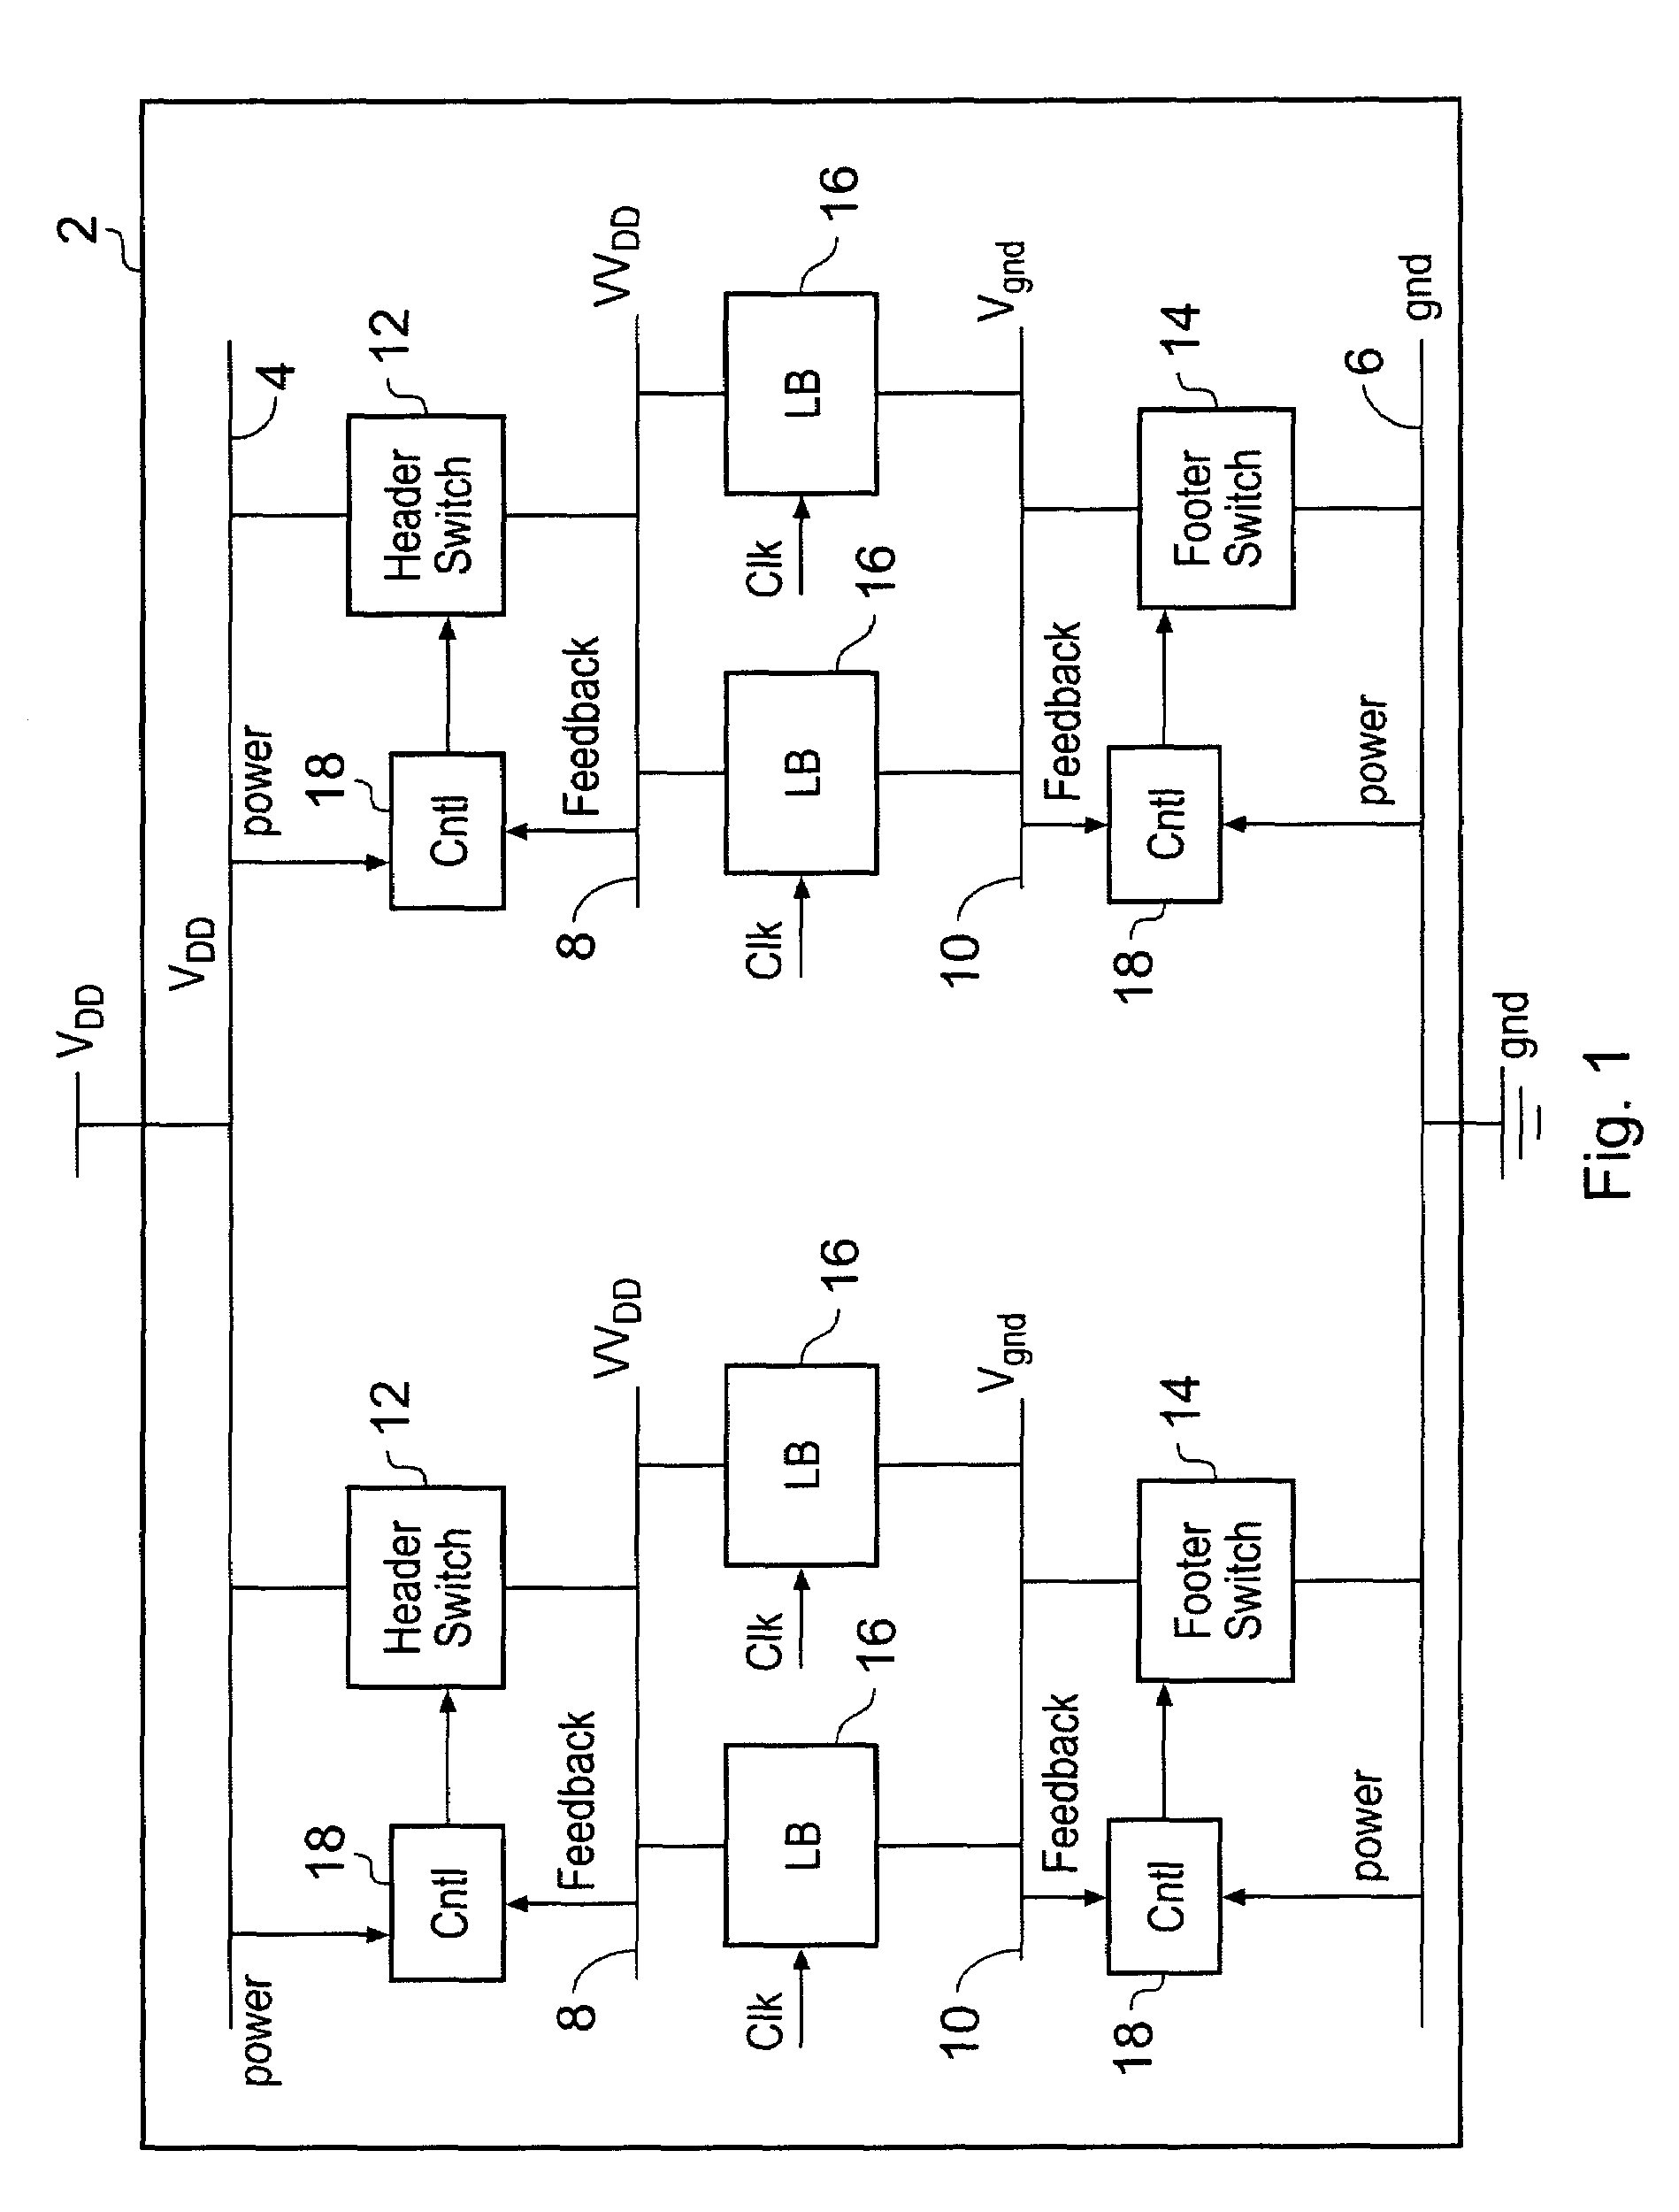 Virtual power rail modulation within an integrated circuit